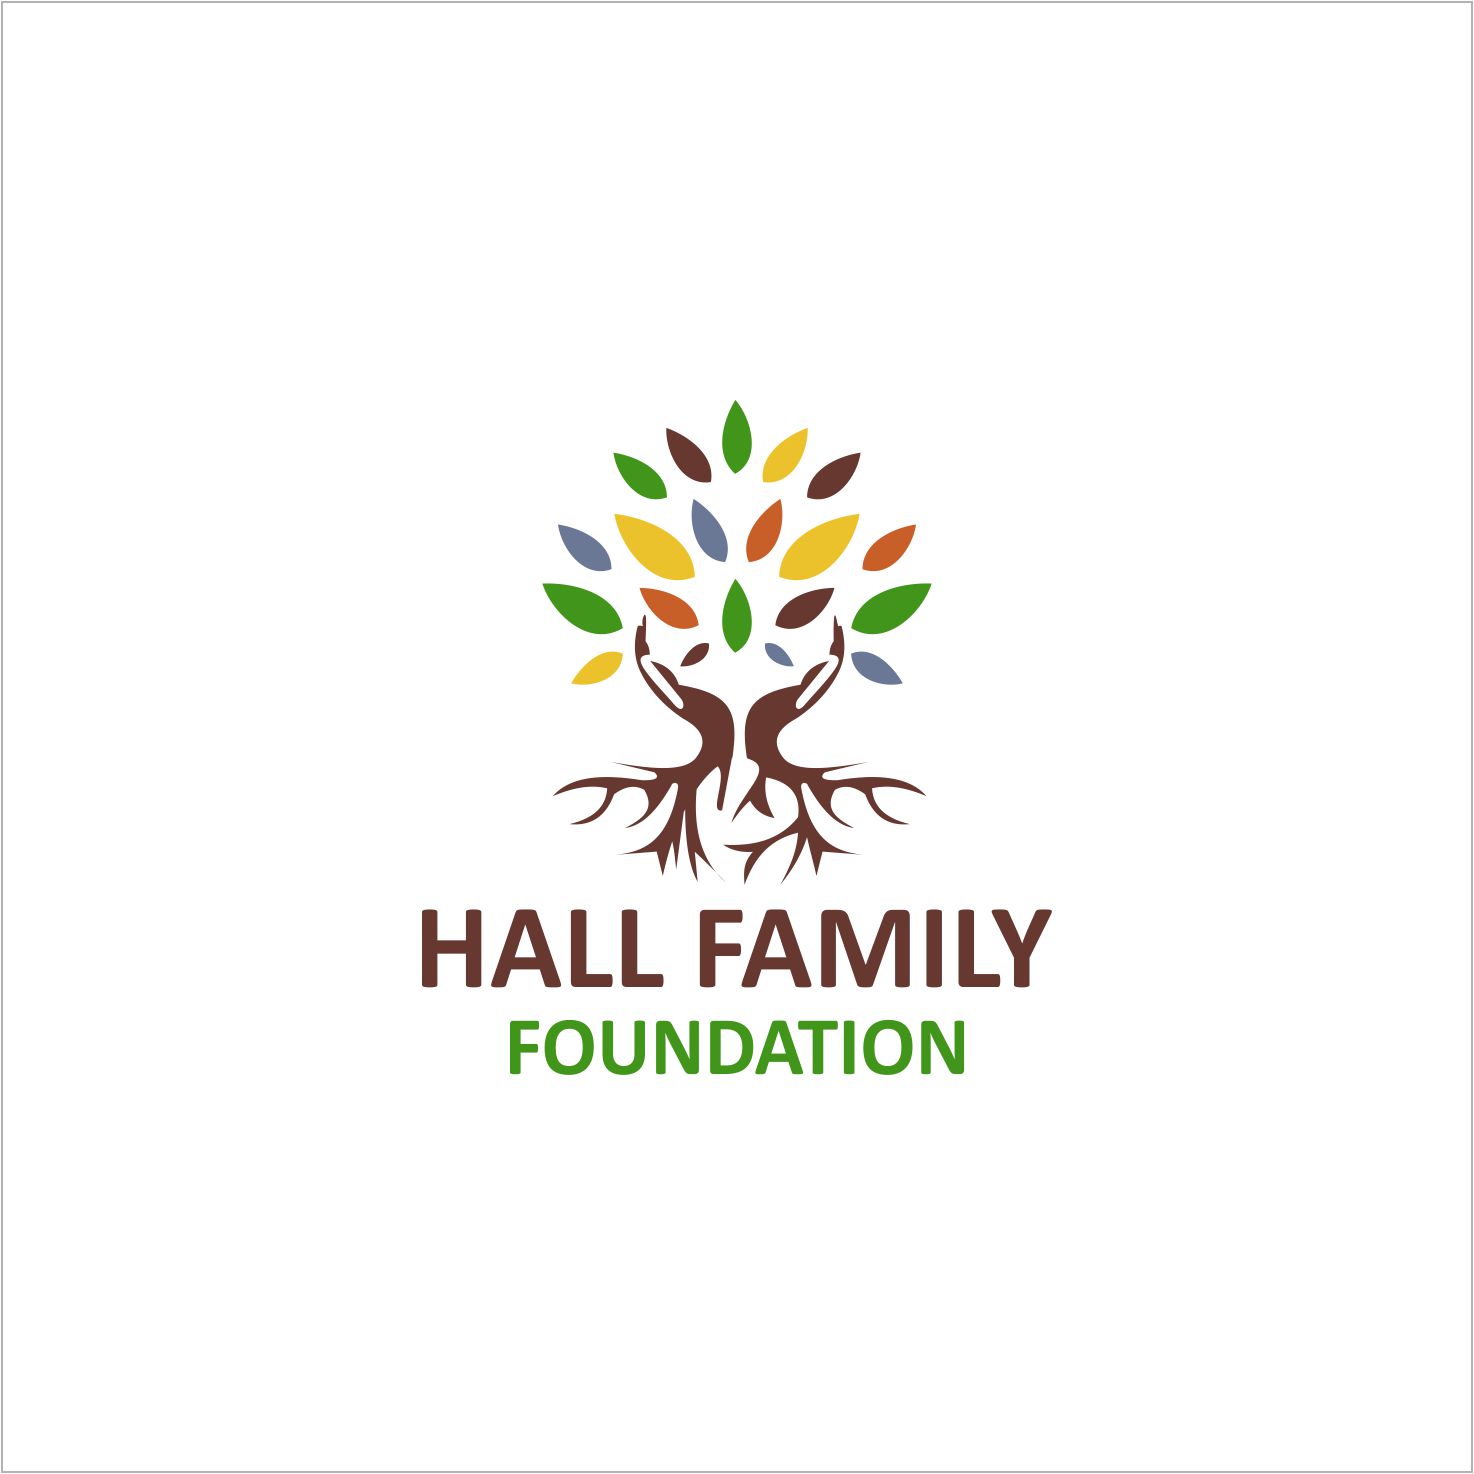 foundation logo ideas 6